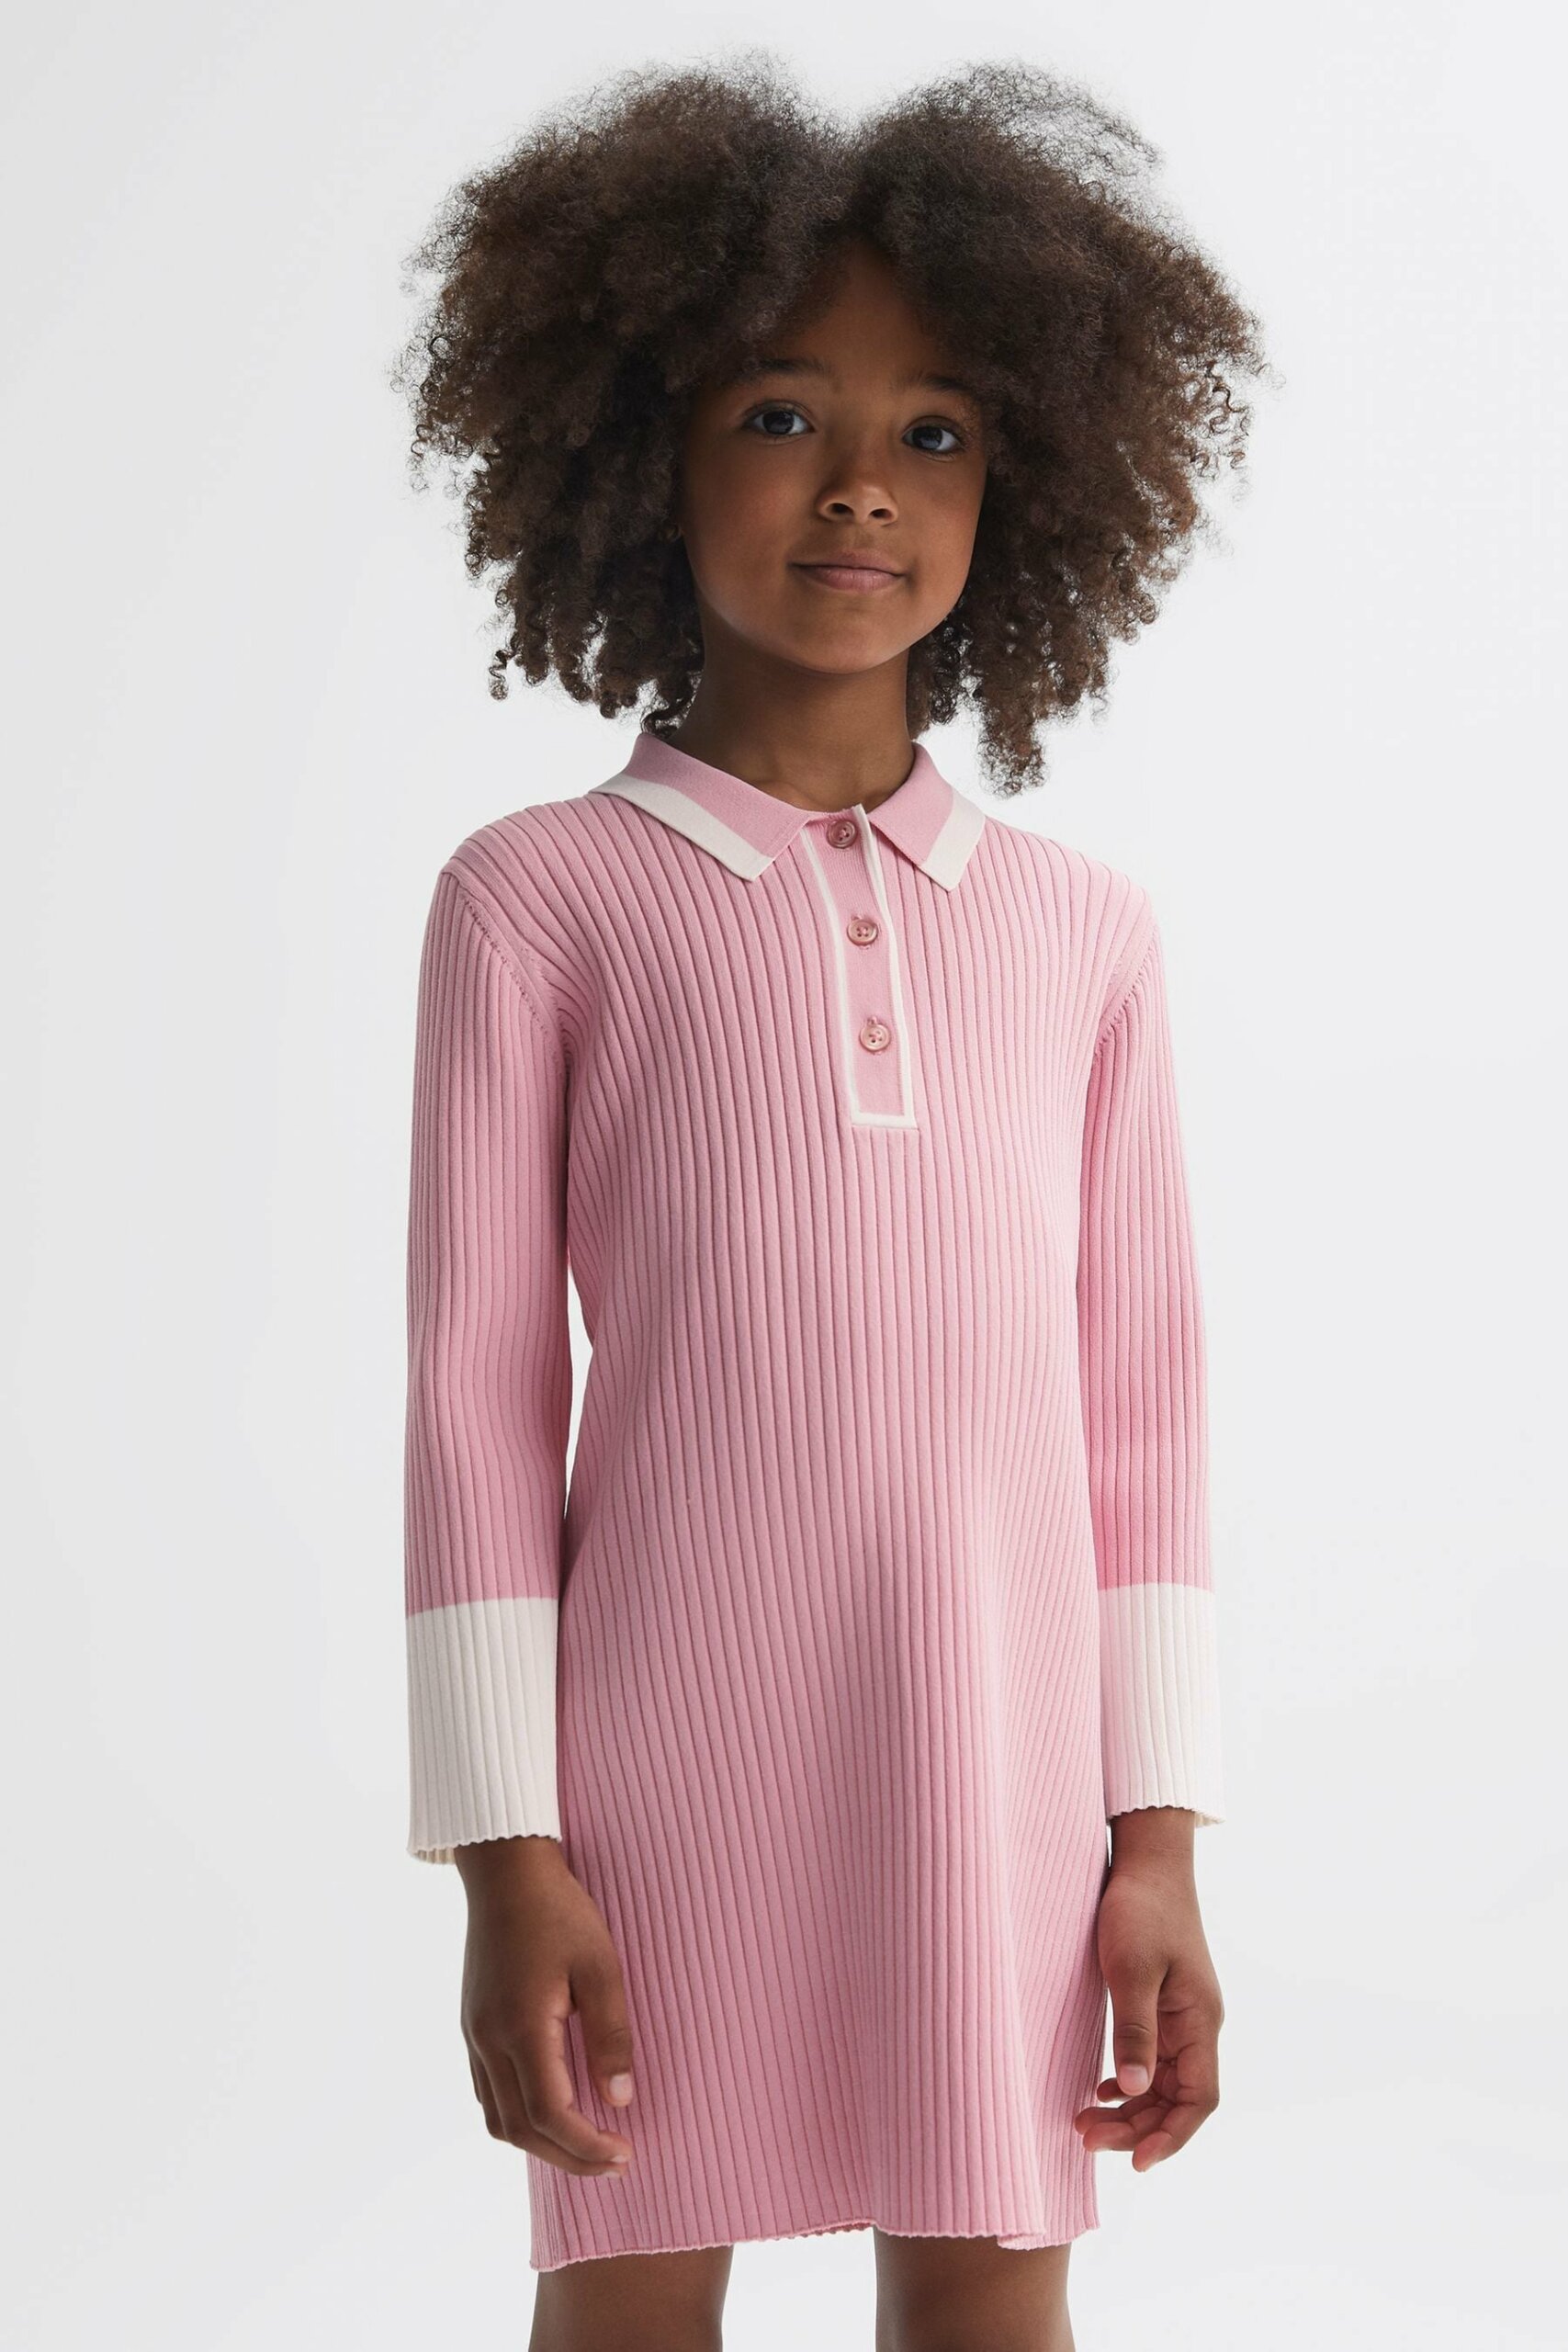 Sammy Senior Polo Dress - Pink Viscose Nylon knitted, Size: 12